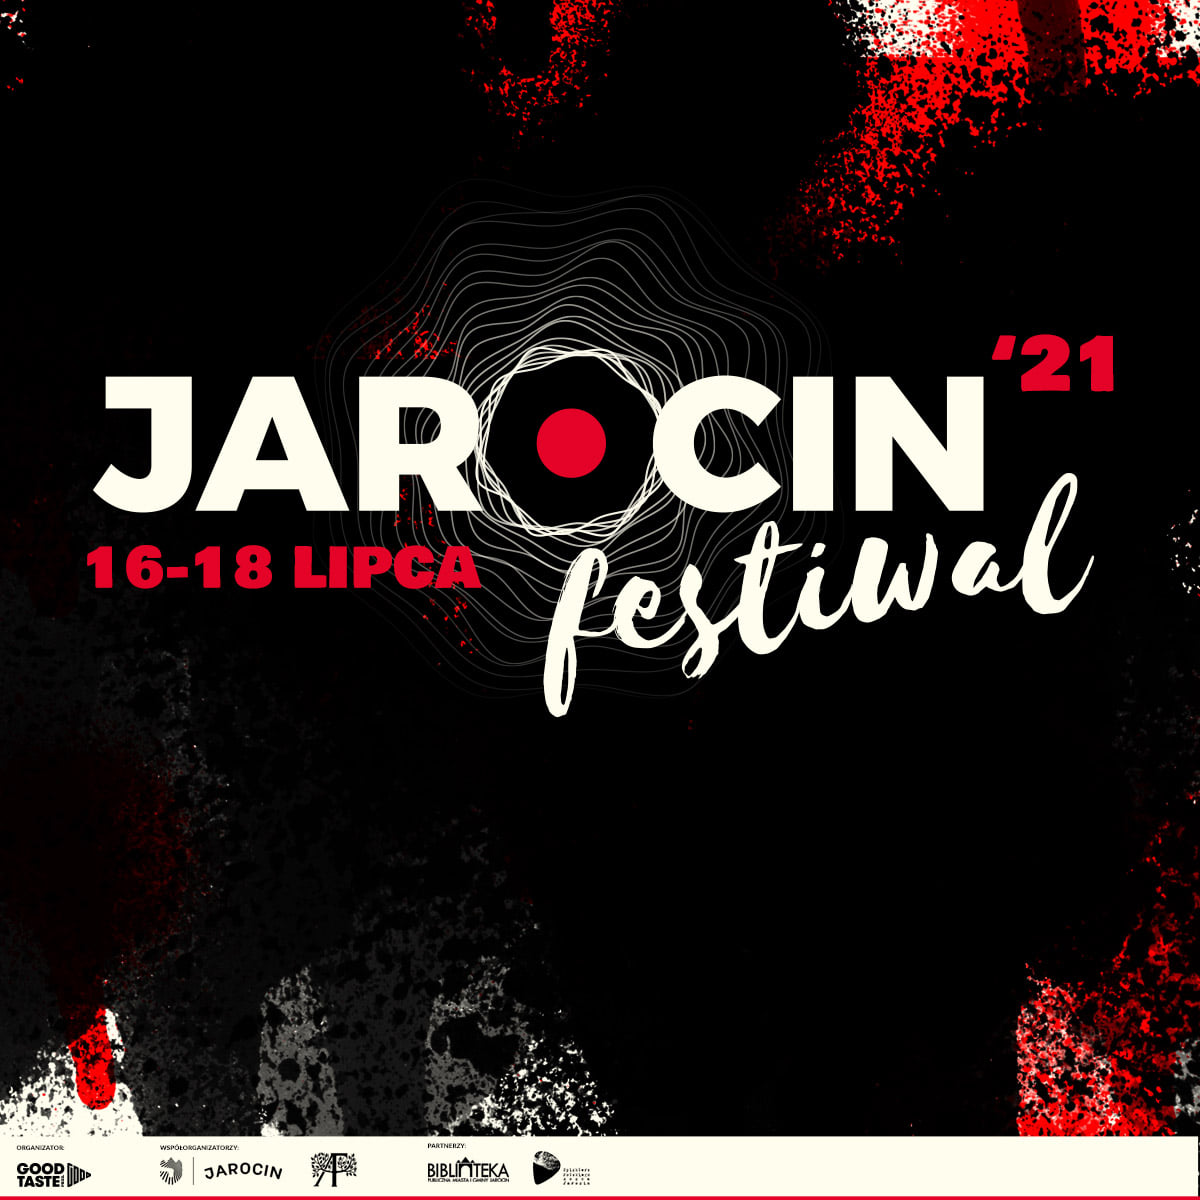 Jarocin Festiwal 2021 startuje za 3 miesiące :D